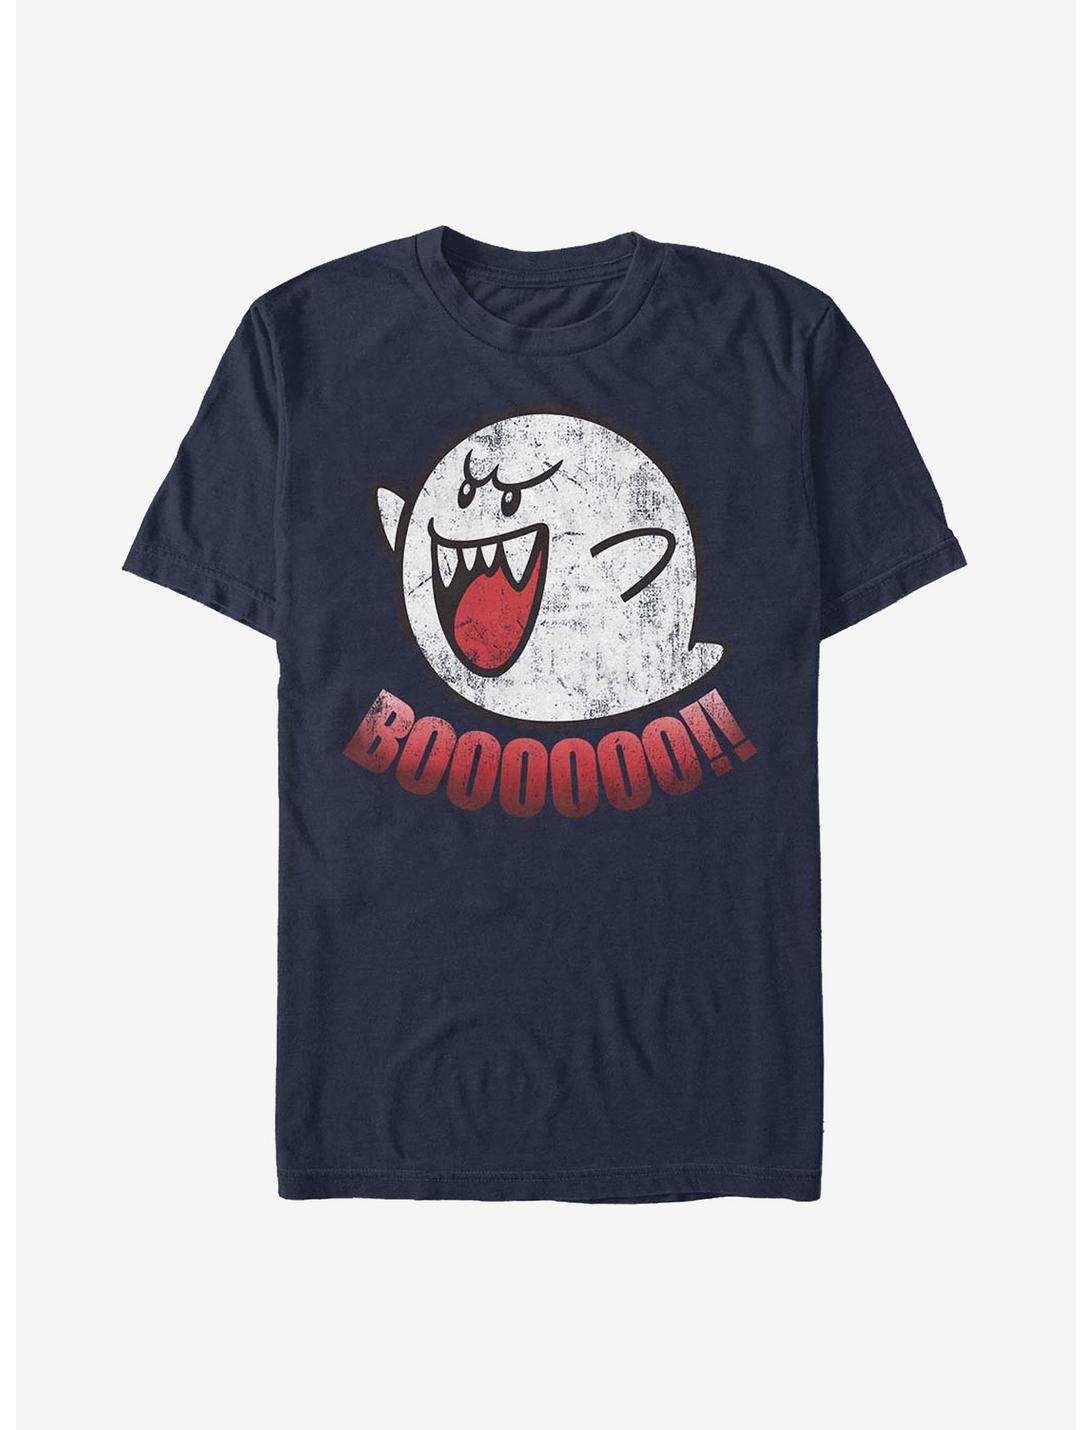 Nintendo Boo Ghost T-Shirt, NAVY, hi-res